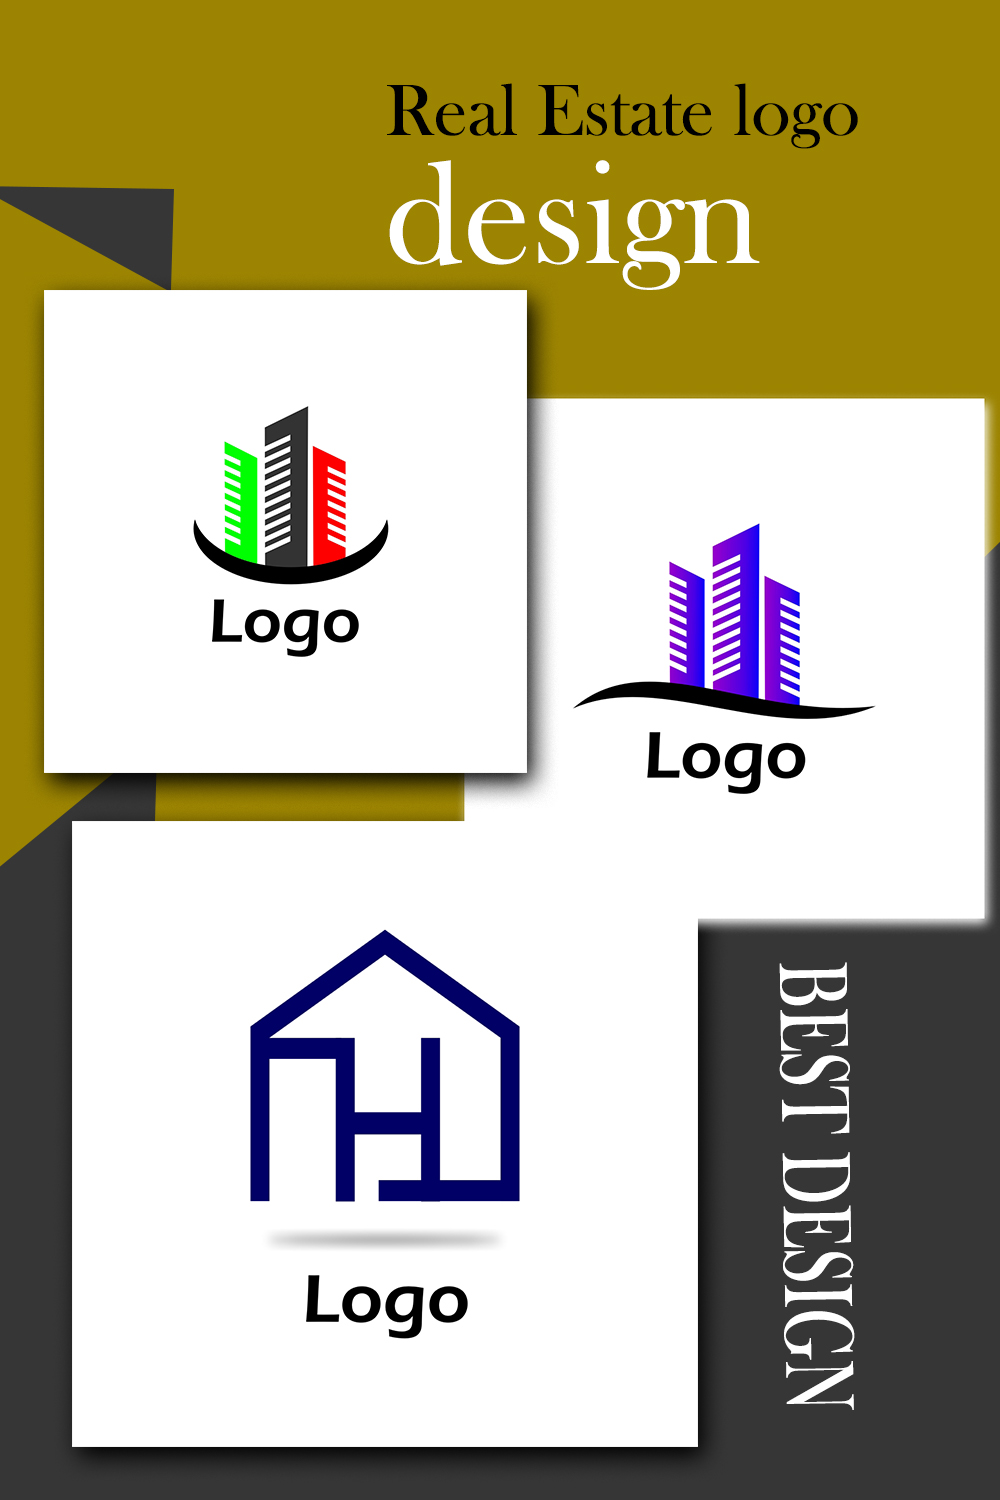 4 Real Estate Logo Pinterest Collage image.